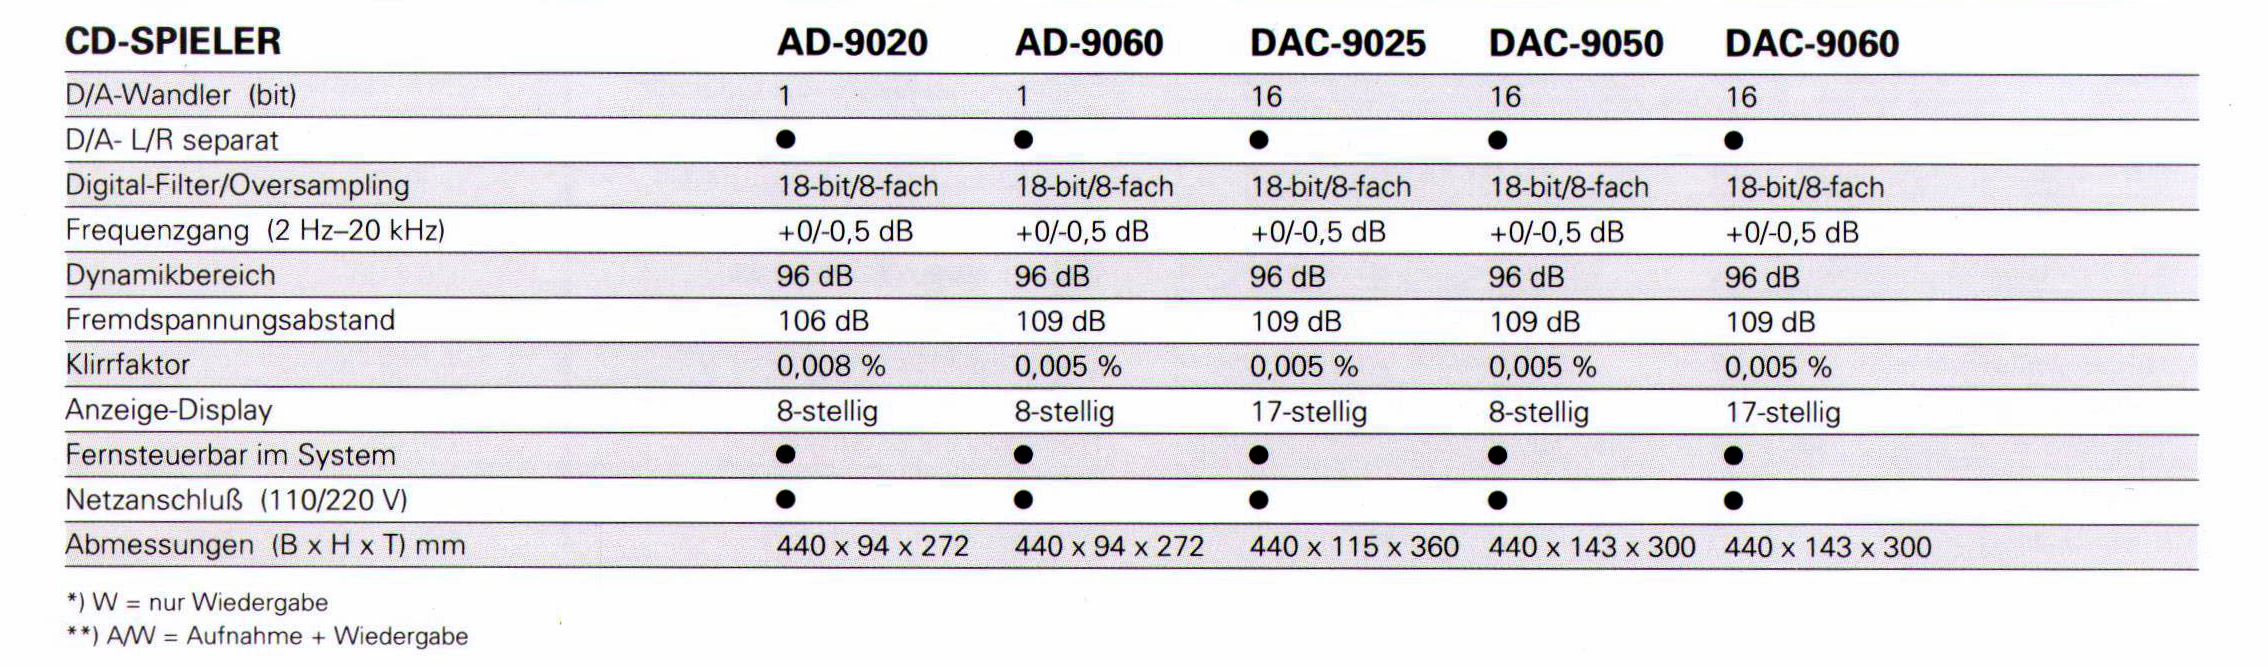 Fisher AD-DAC Daten-1992.jpg